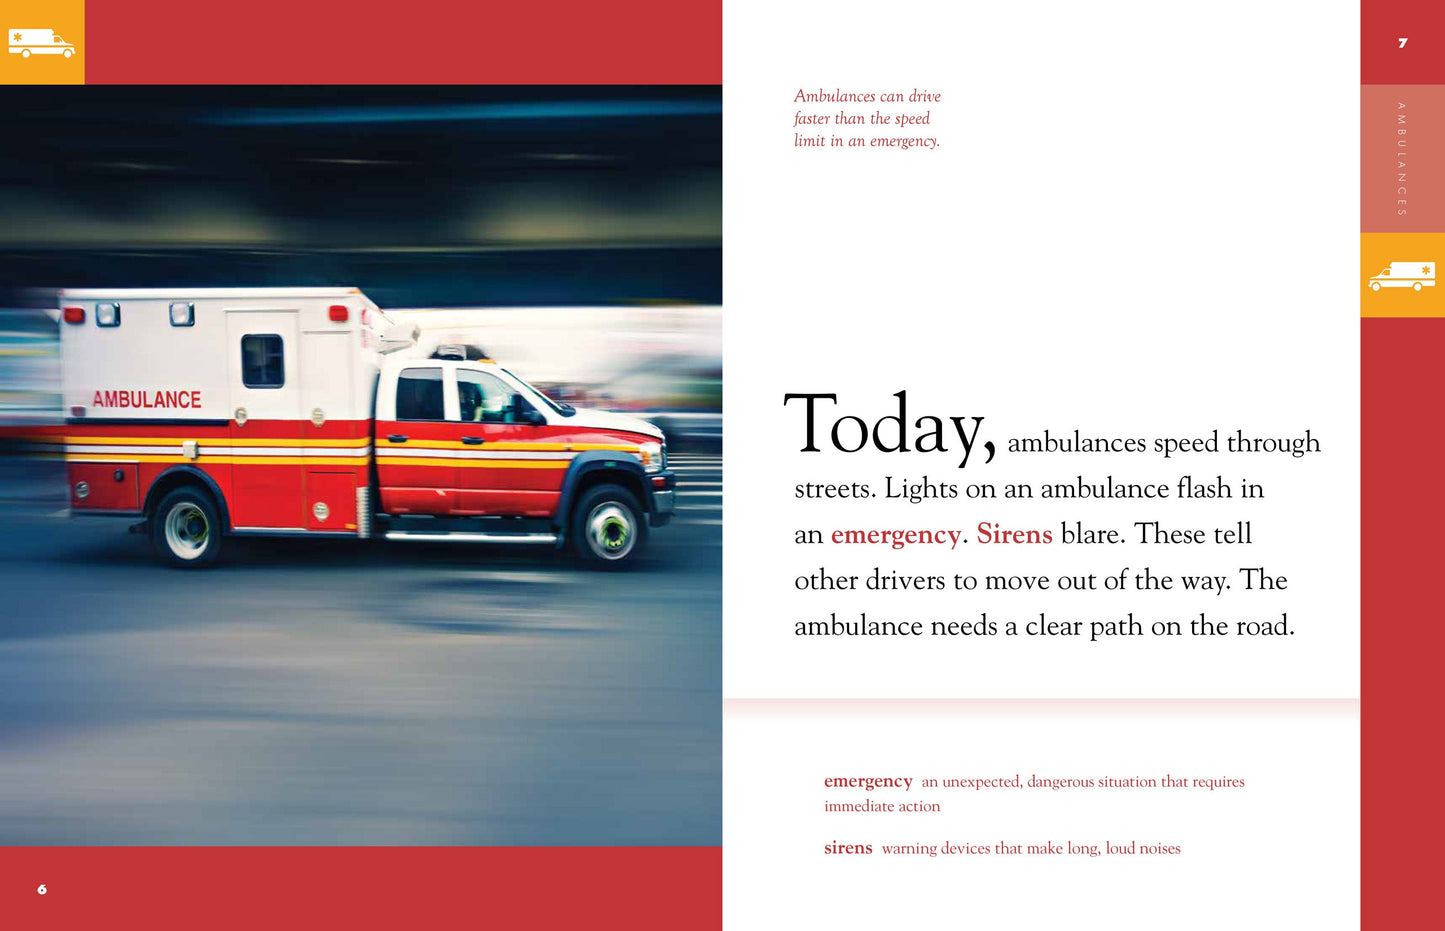 Amazing Rescue Vehicles: Ambulances by The Creative Company Shop